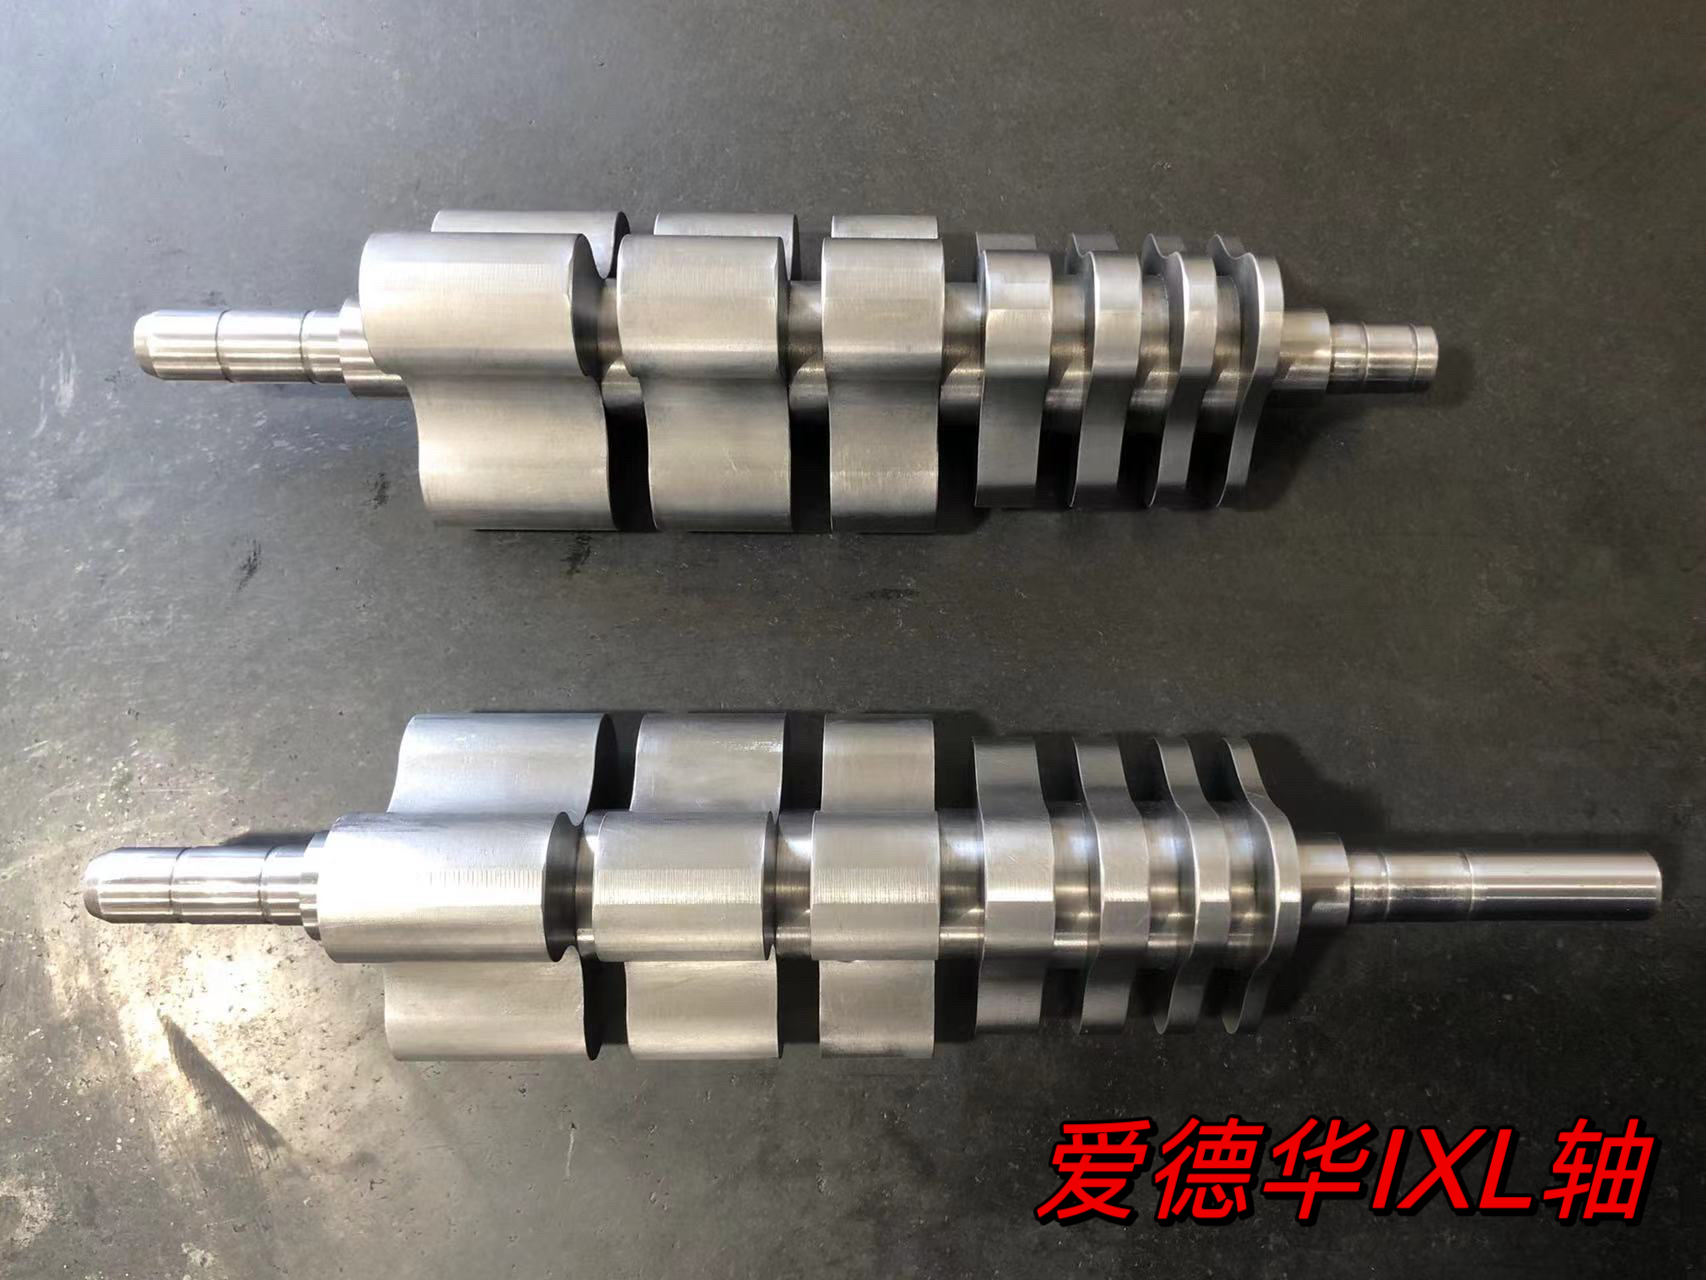 Vacuum pump rotor shaft / 爱德华IXL轴